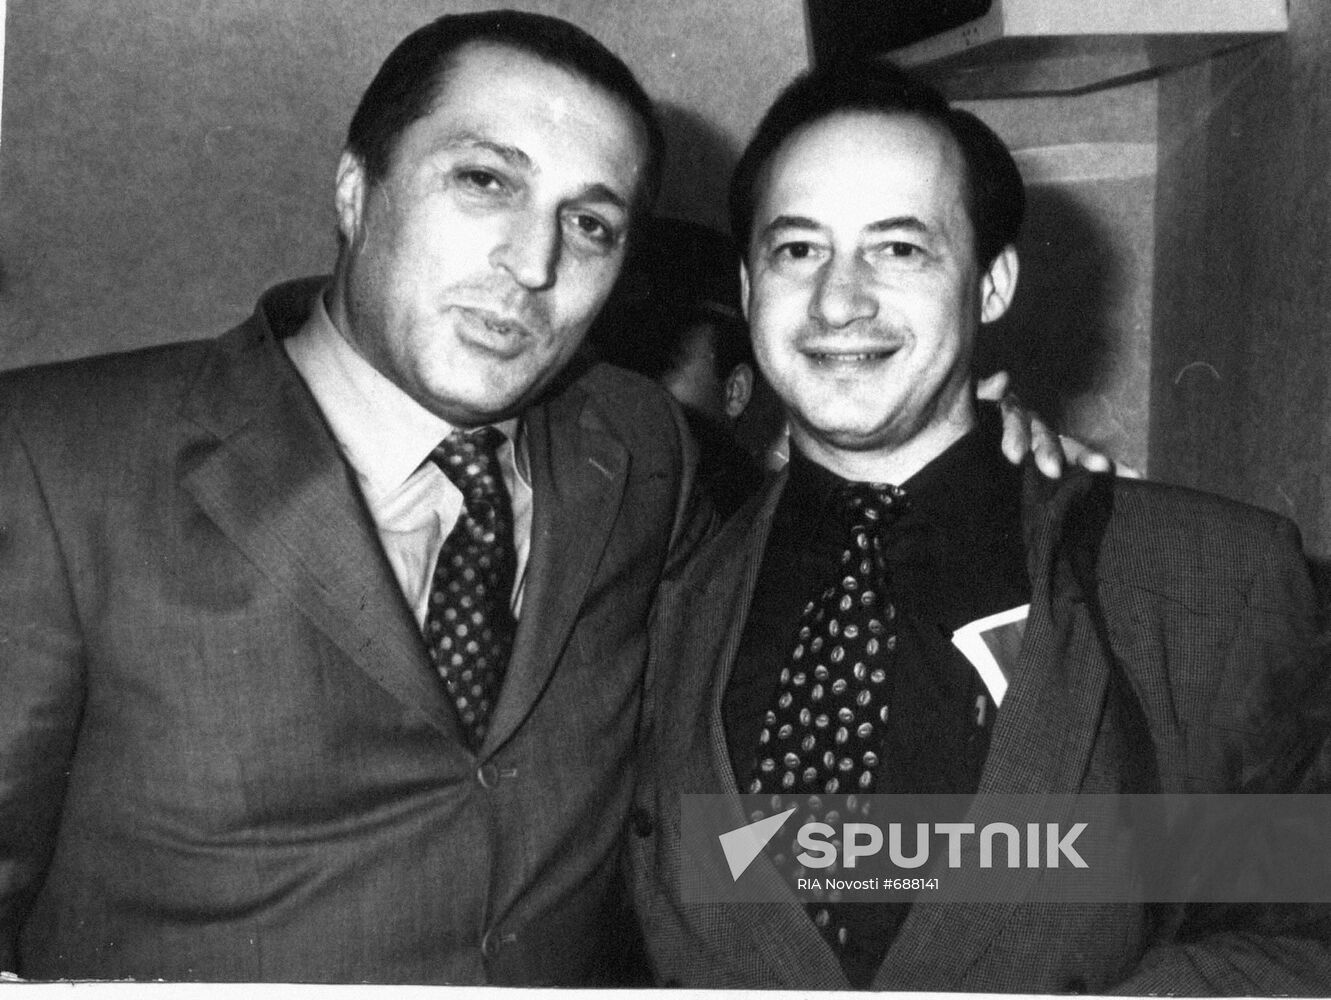 Opera singer Paata Burchuladze and violinist Vladimir Spivakov